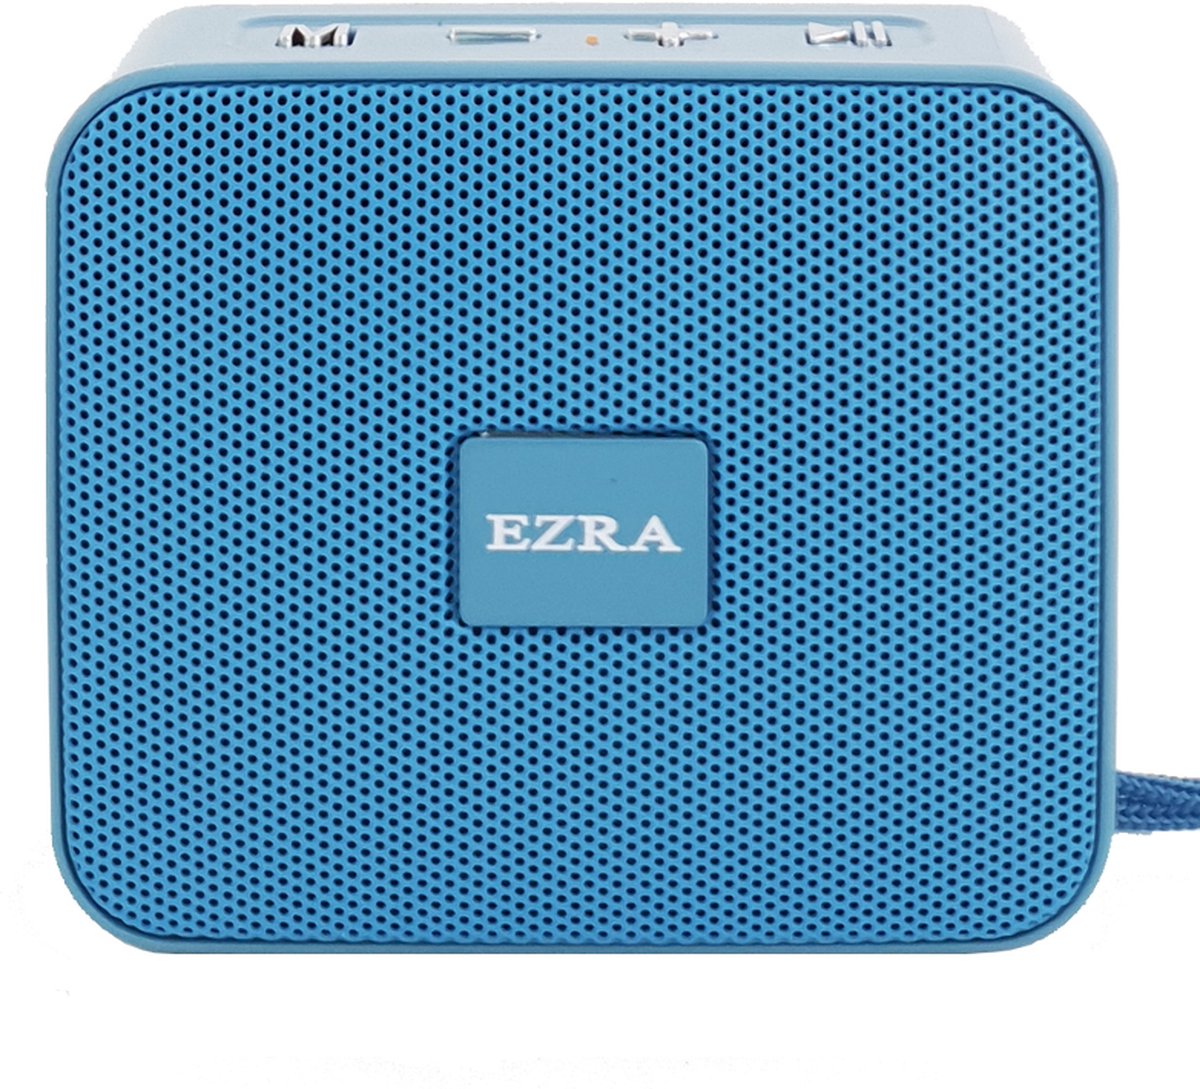 EZRA Portable draagbare wireless speaker - BLAUW - mini speaker - Bluetooth 5.0 - bluetooth speaker - usb aansluiting